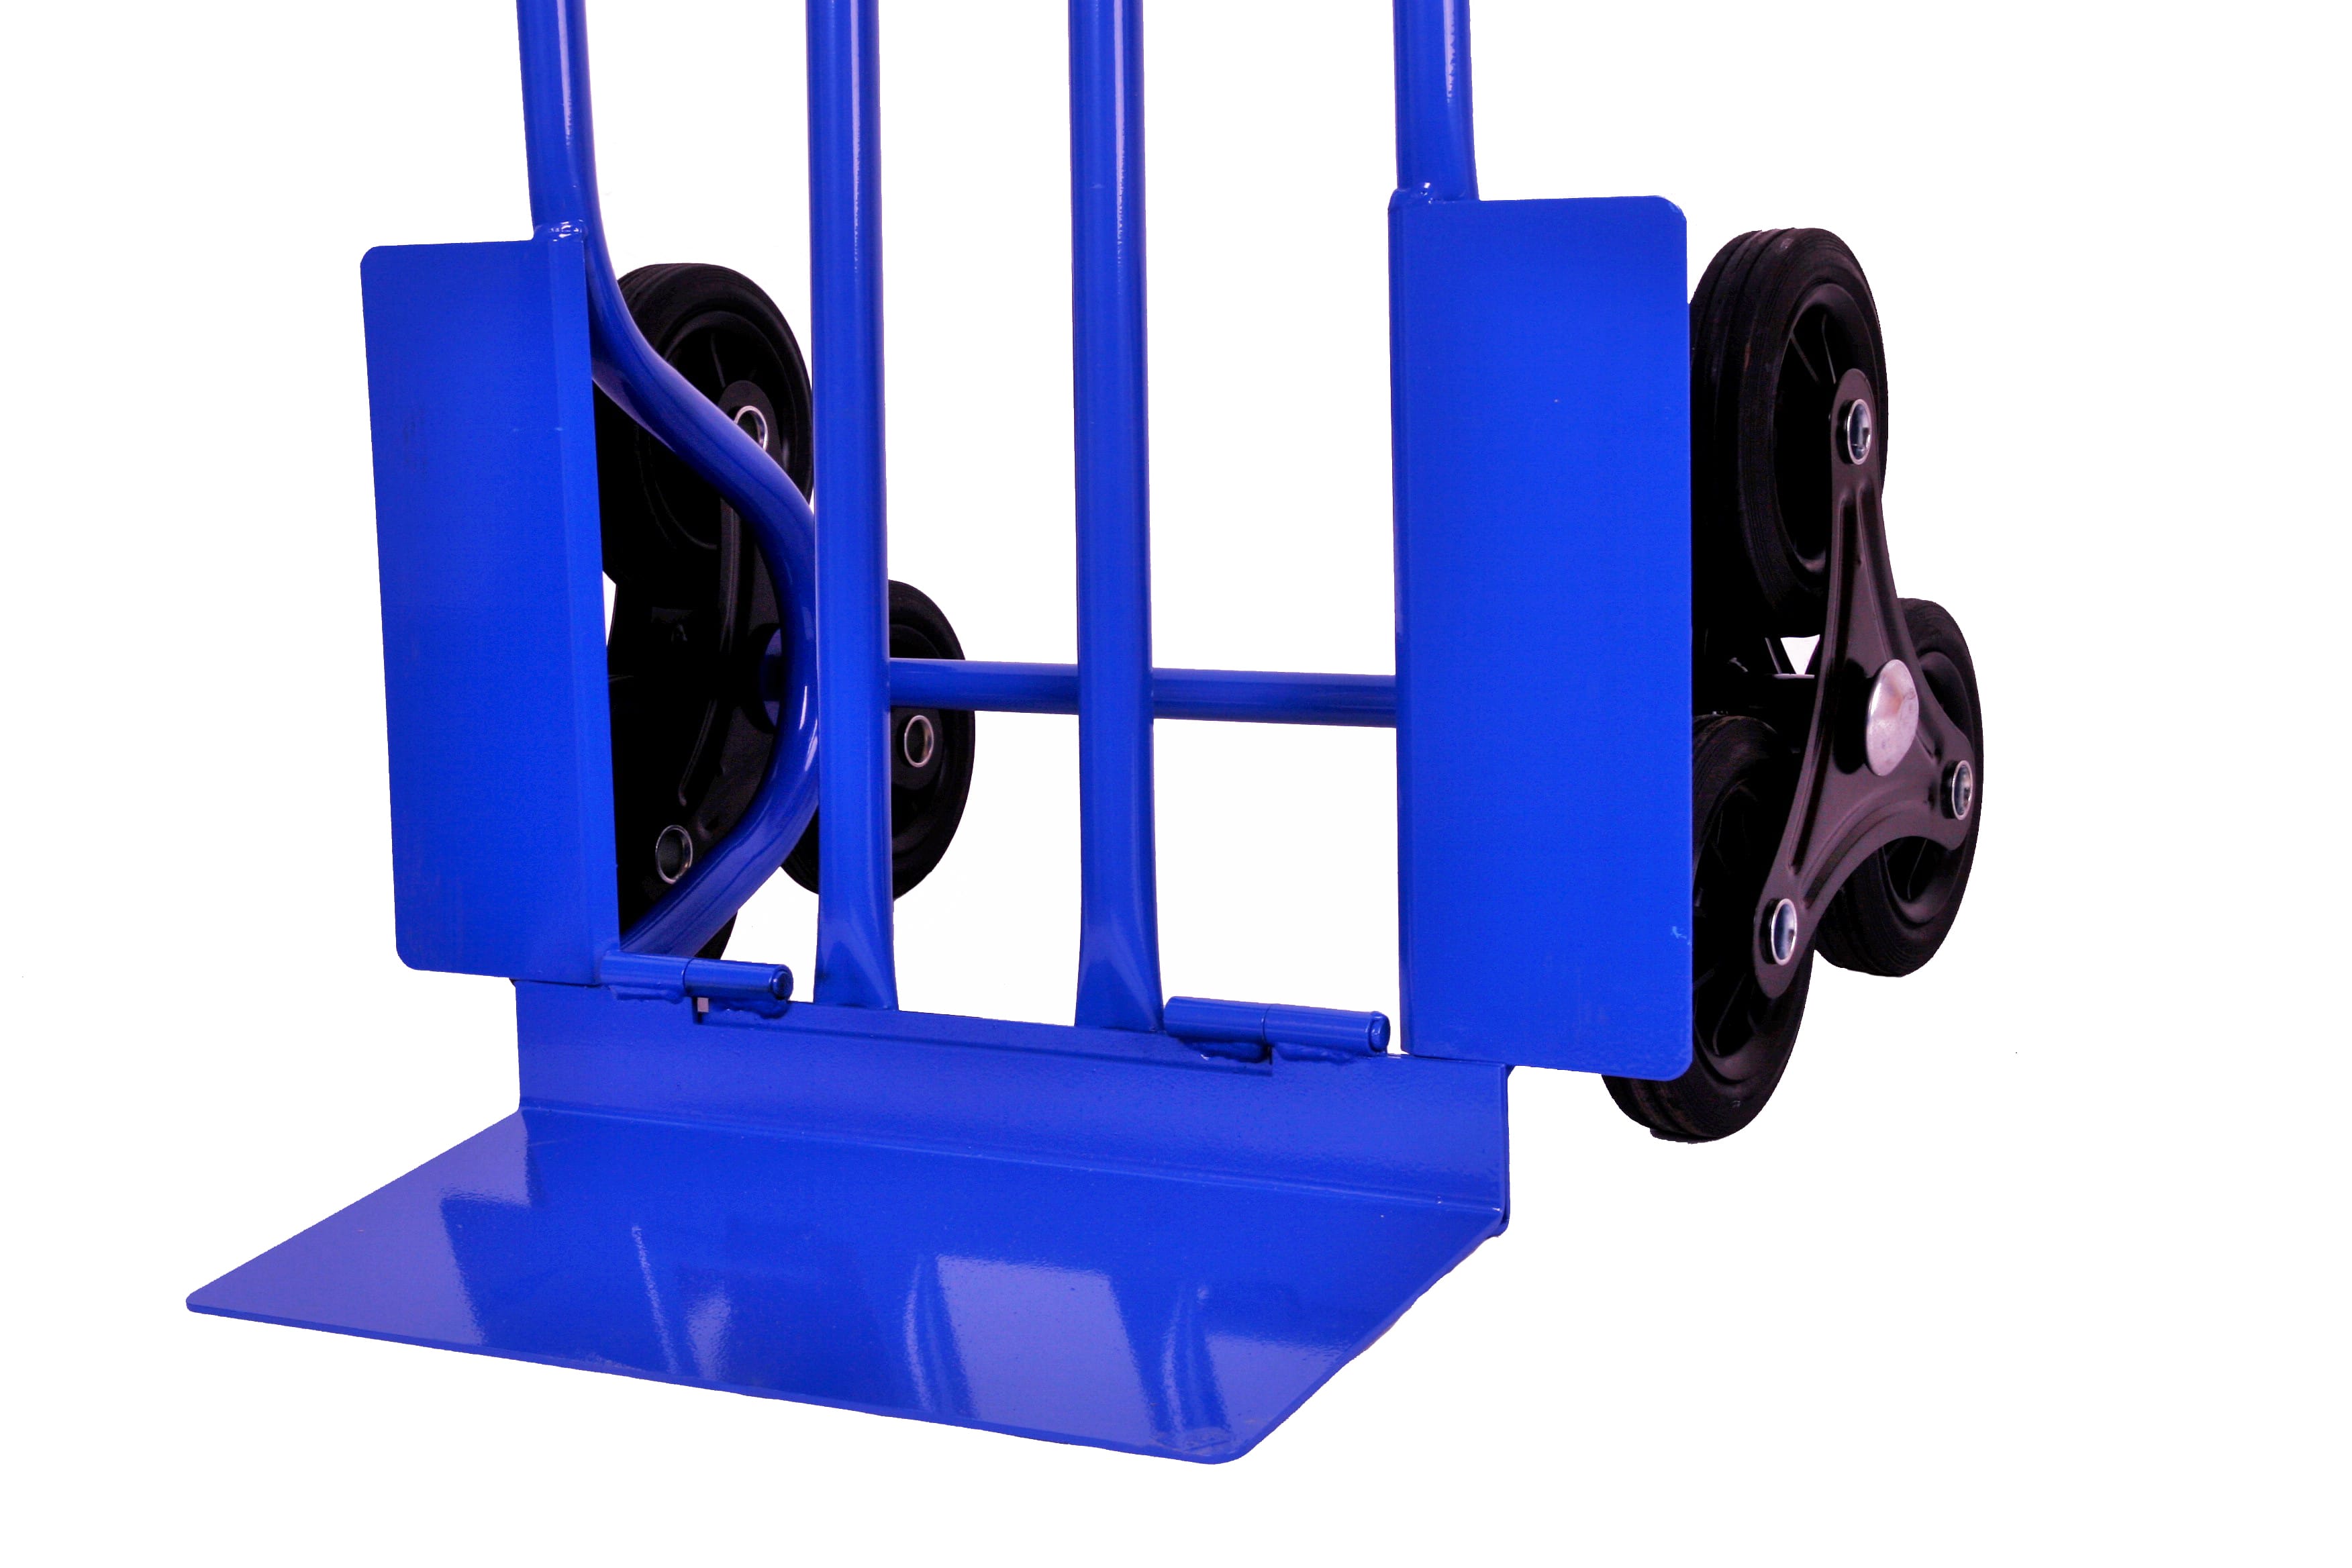 Treppenkarre aus Stahl, mit Vollgummi-Sternrad Ø160 mm, blau, Tragkraft 250 kg